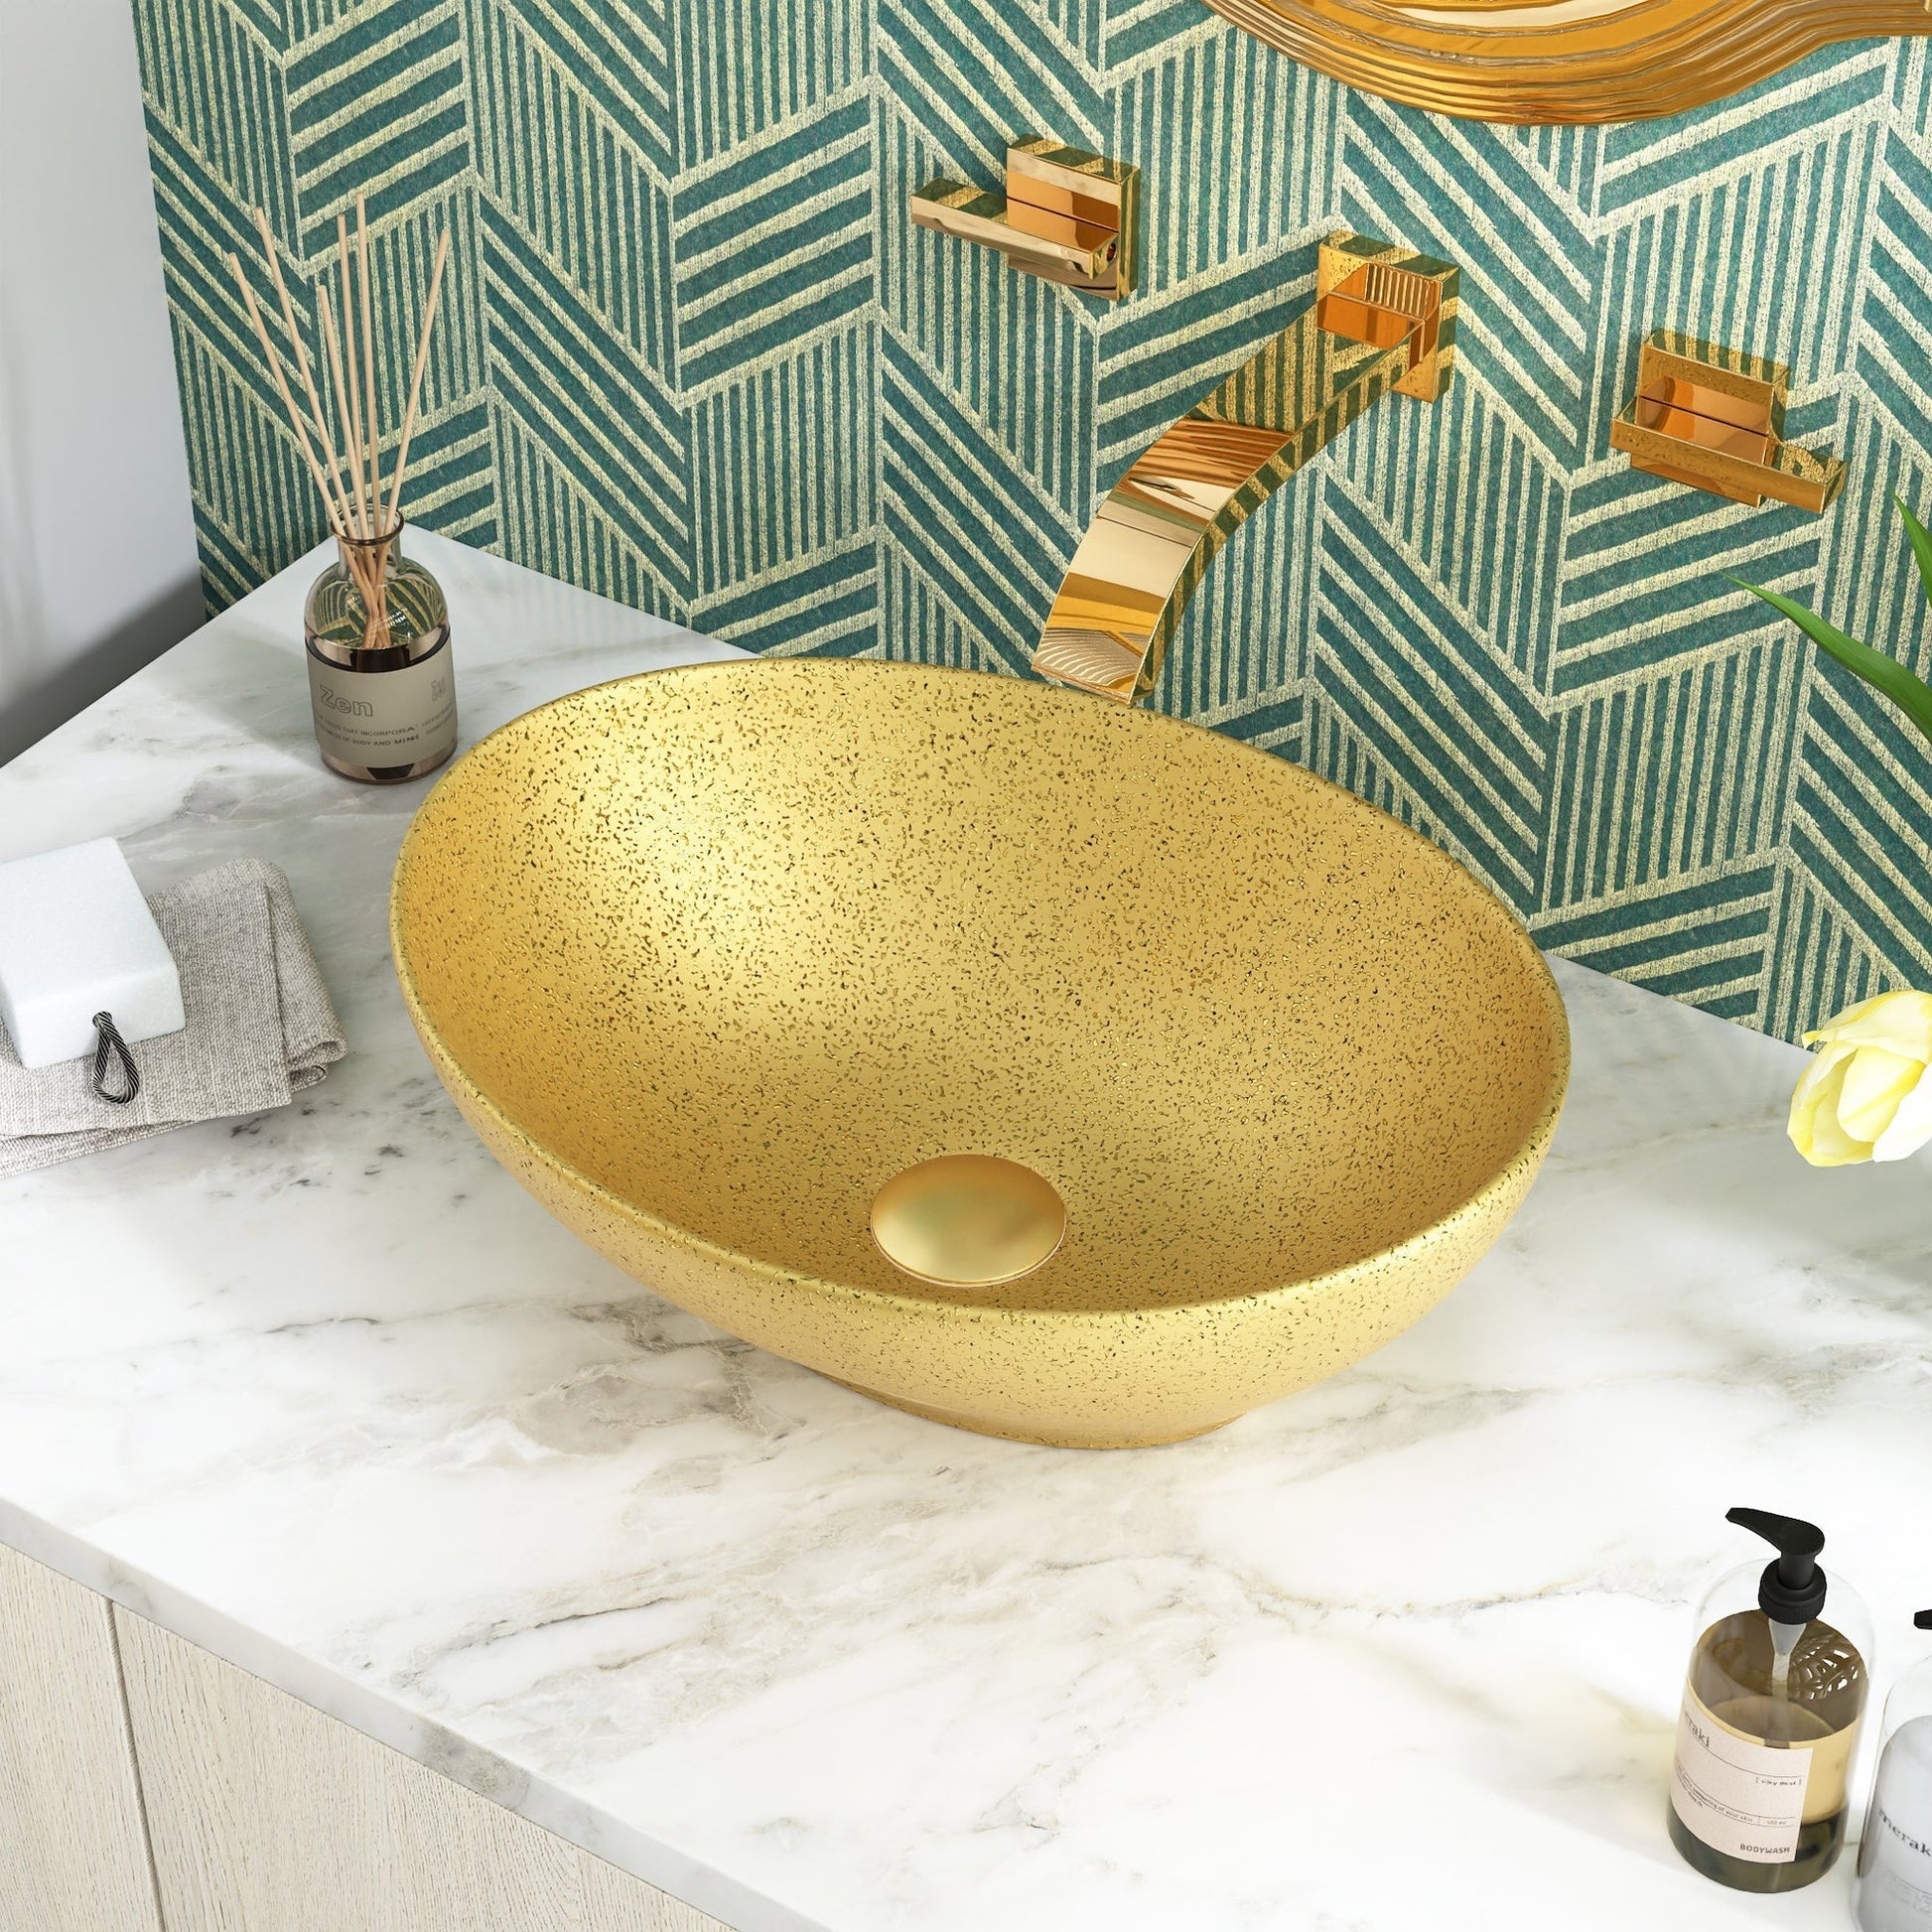 DeerValley Horizon 15" Oval Gold Ceramic Vessel Bathroom Sink